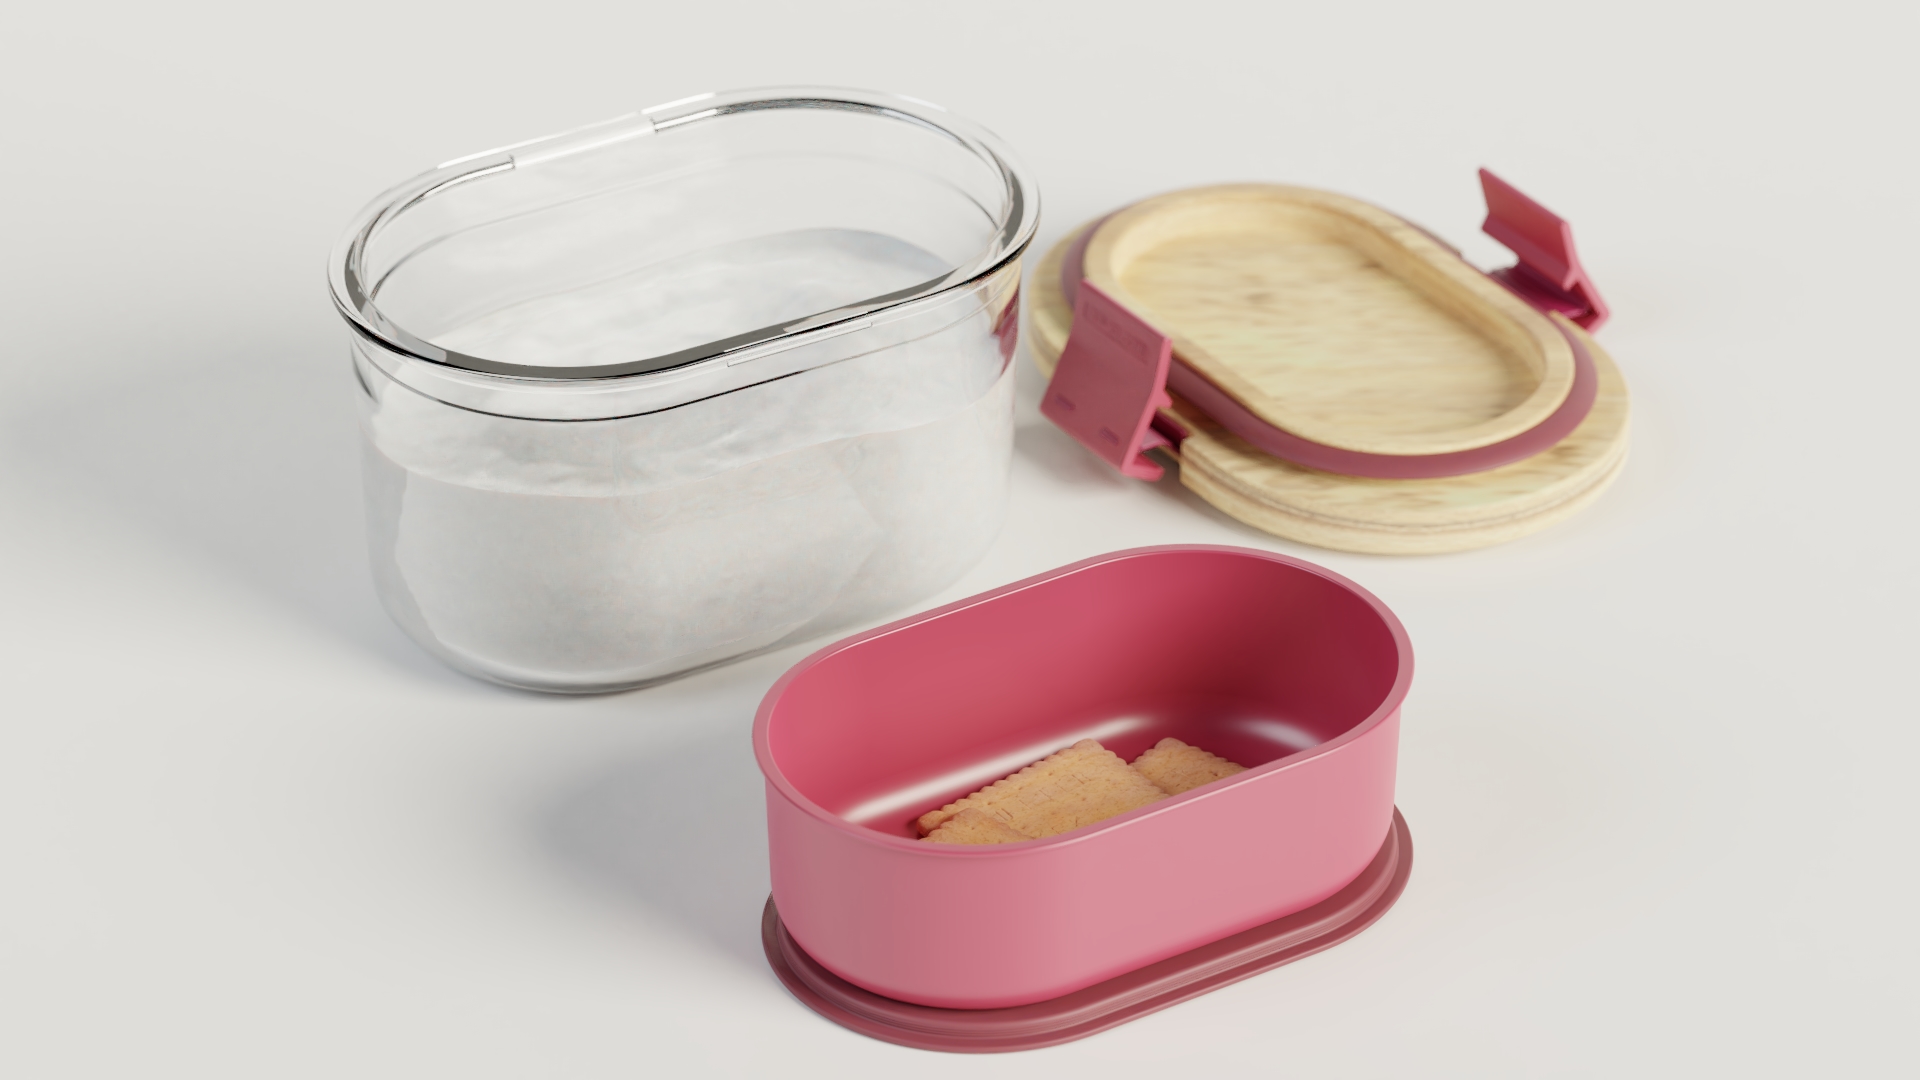 YOGURT AND BITES Yogurt carrier by ALOS. Product Design Studio.